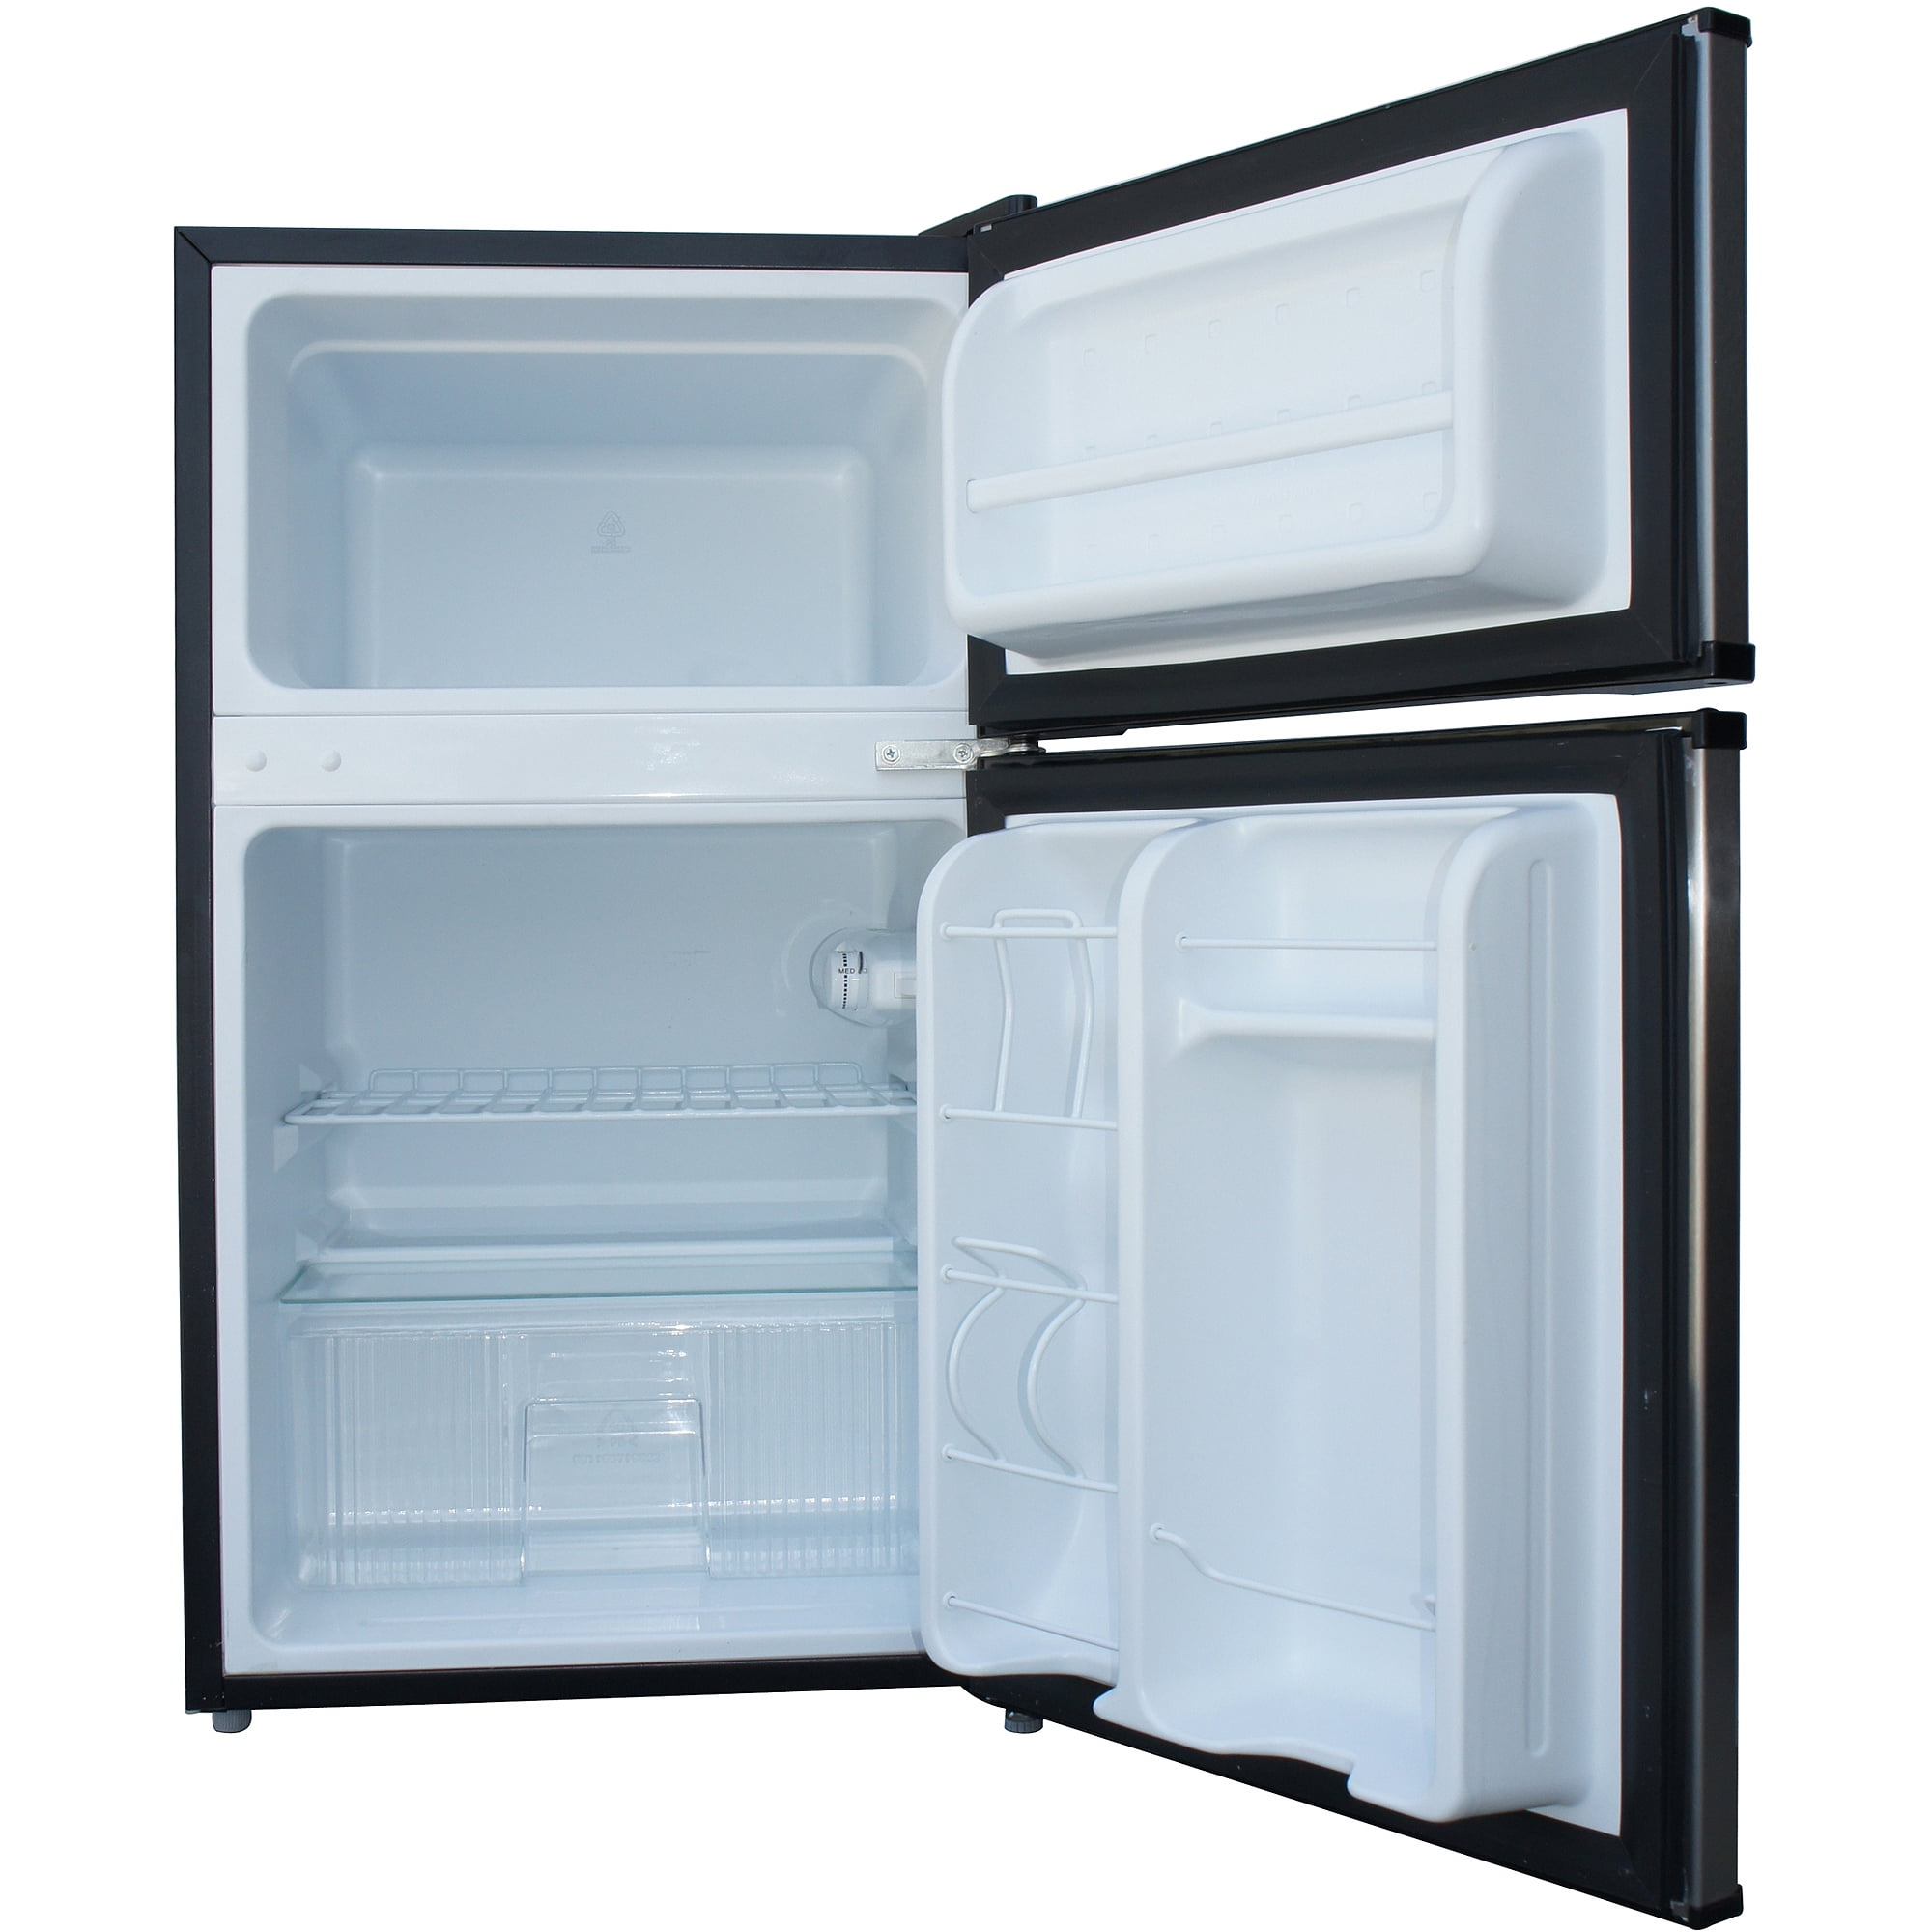 WANAI Two Door Mini Fridge with Freezer, 3.5 Cu ft Small Freezer ,Black 